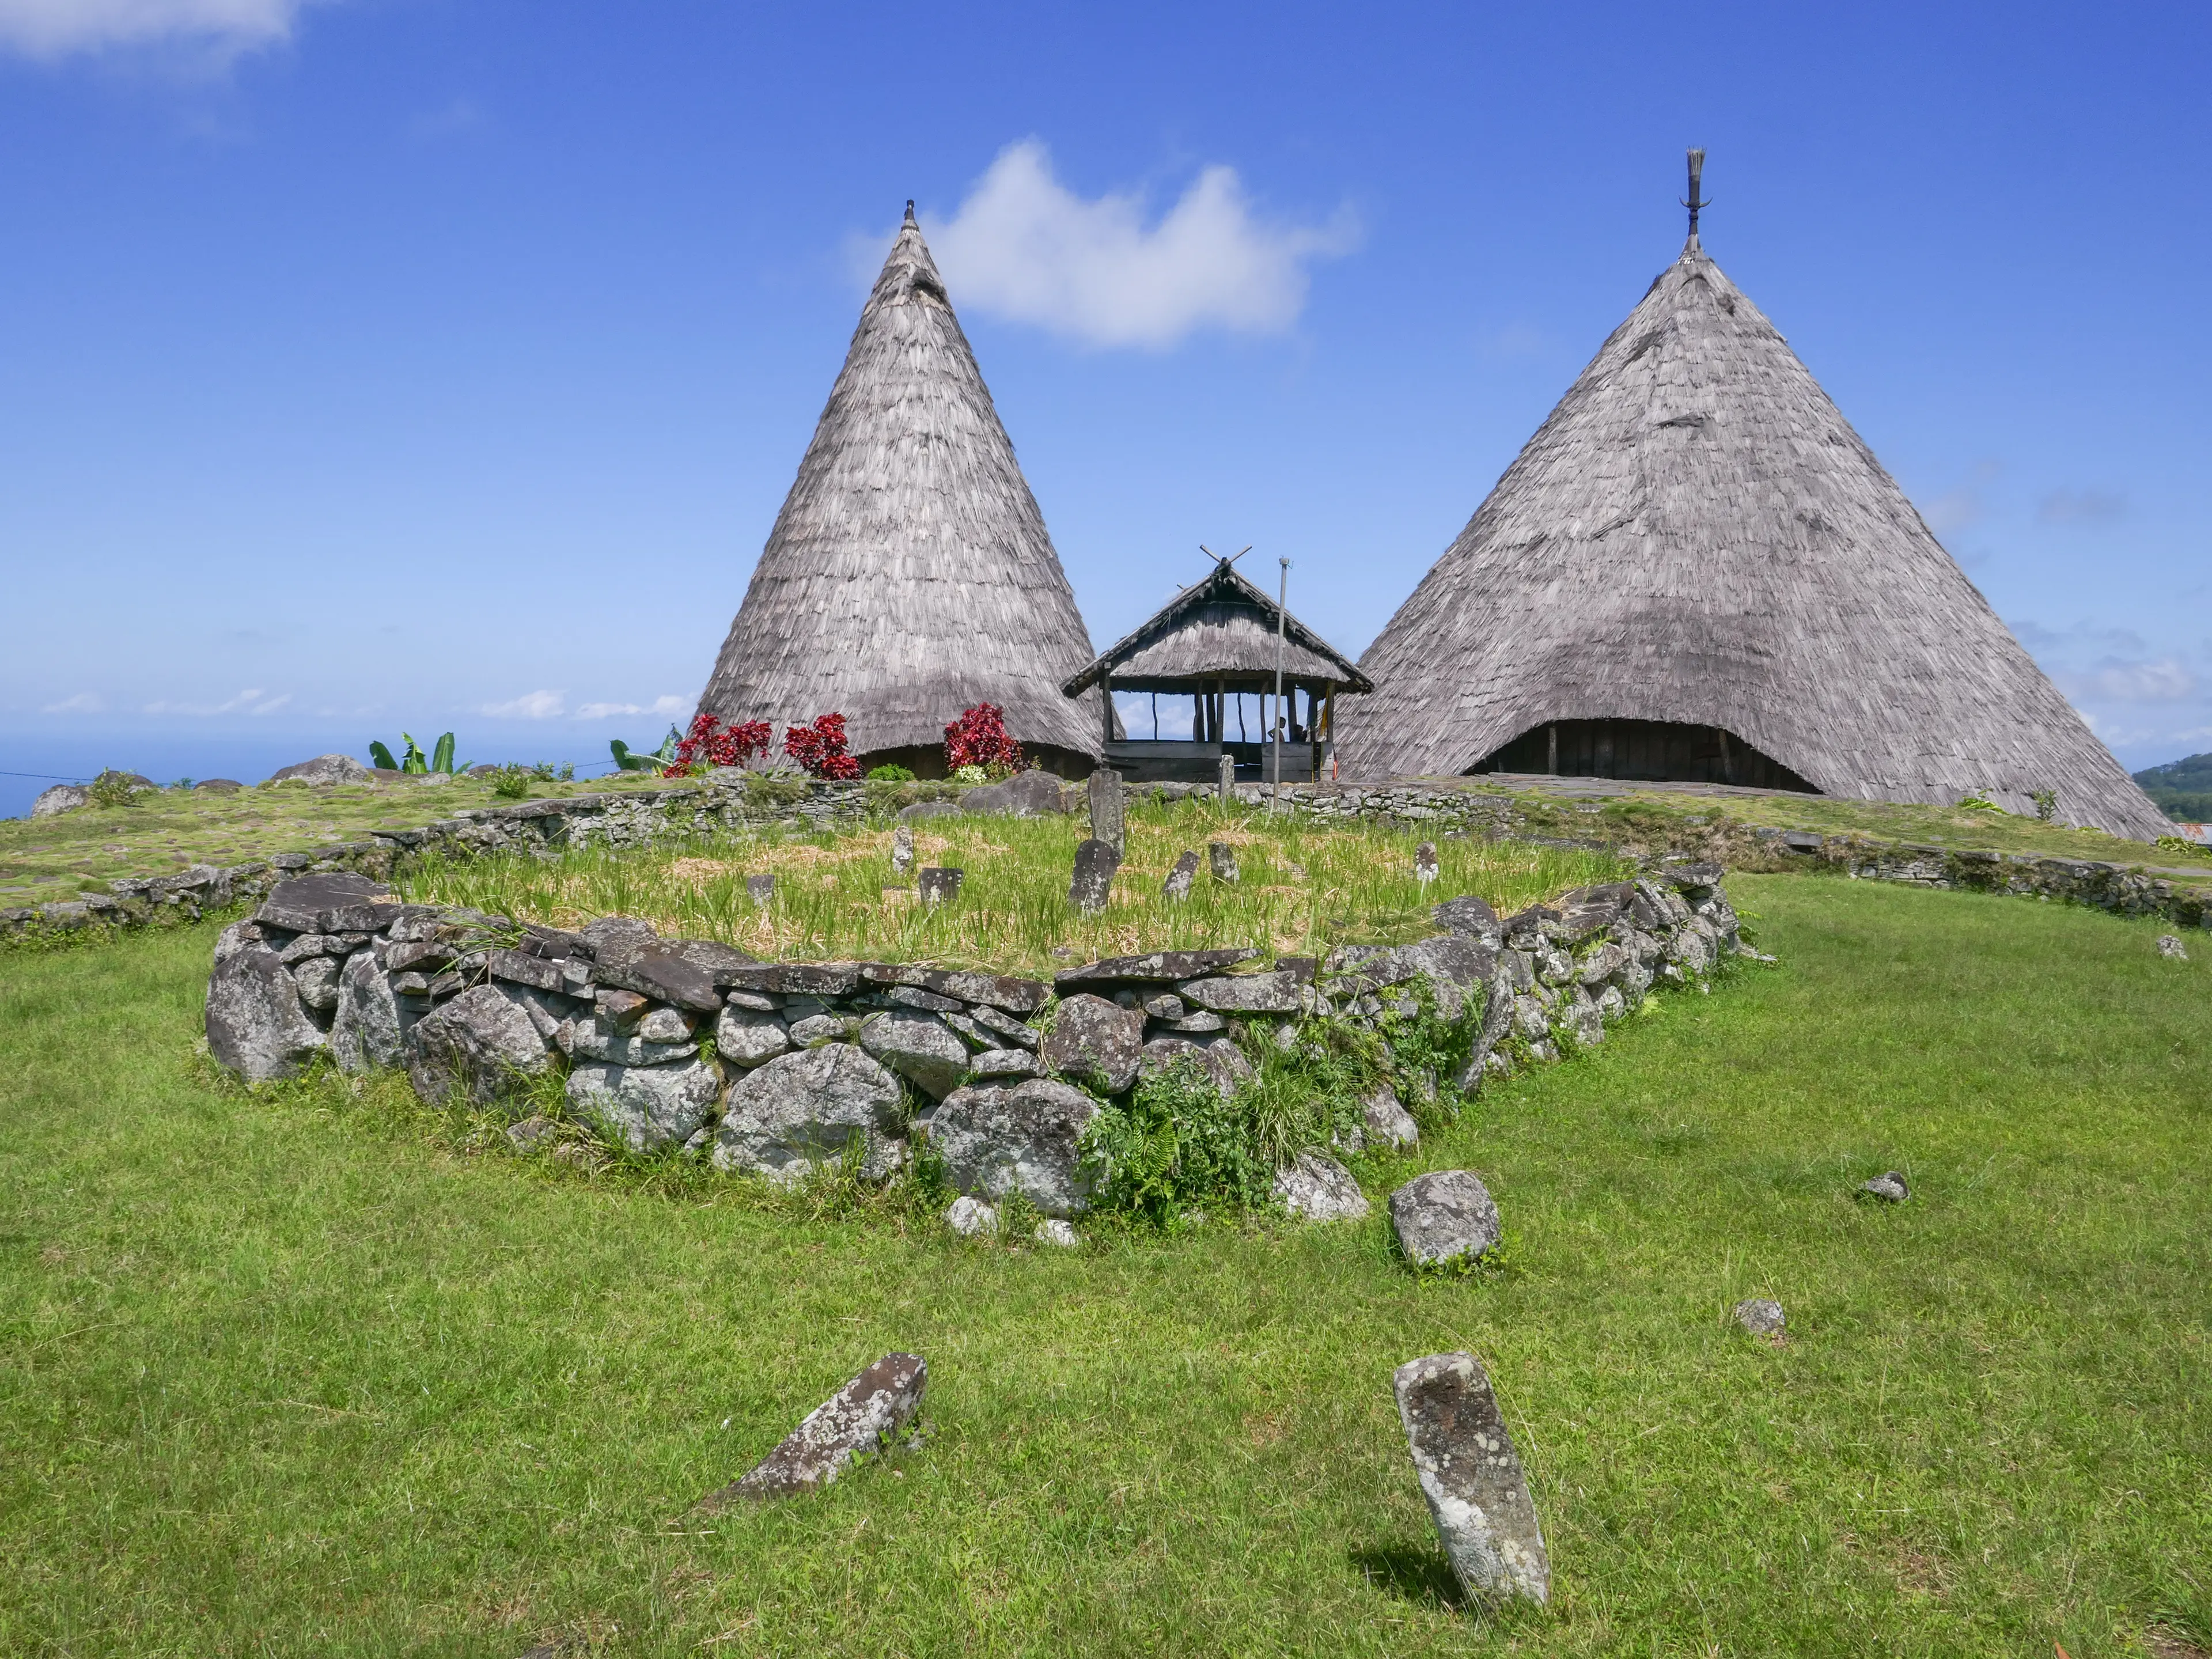 Traditional Manggarai houses and sacred ritual area in Todo village, Manggarai regency